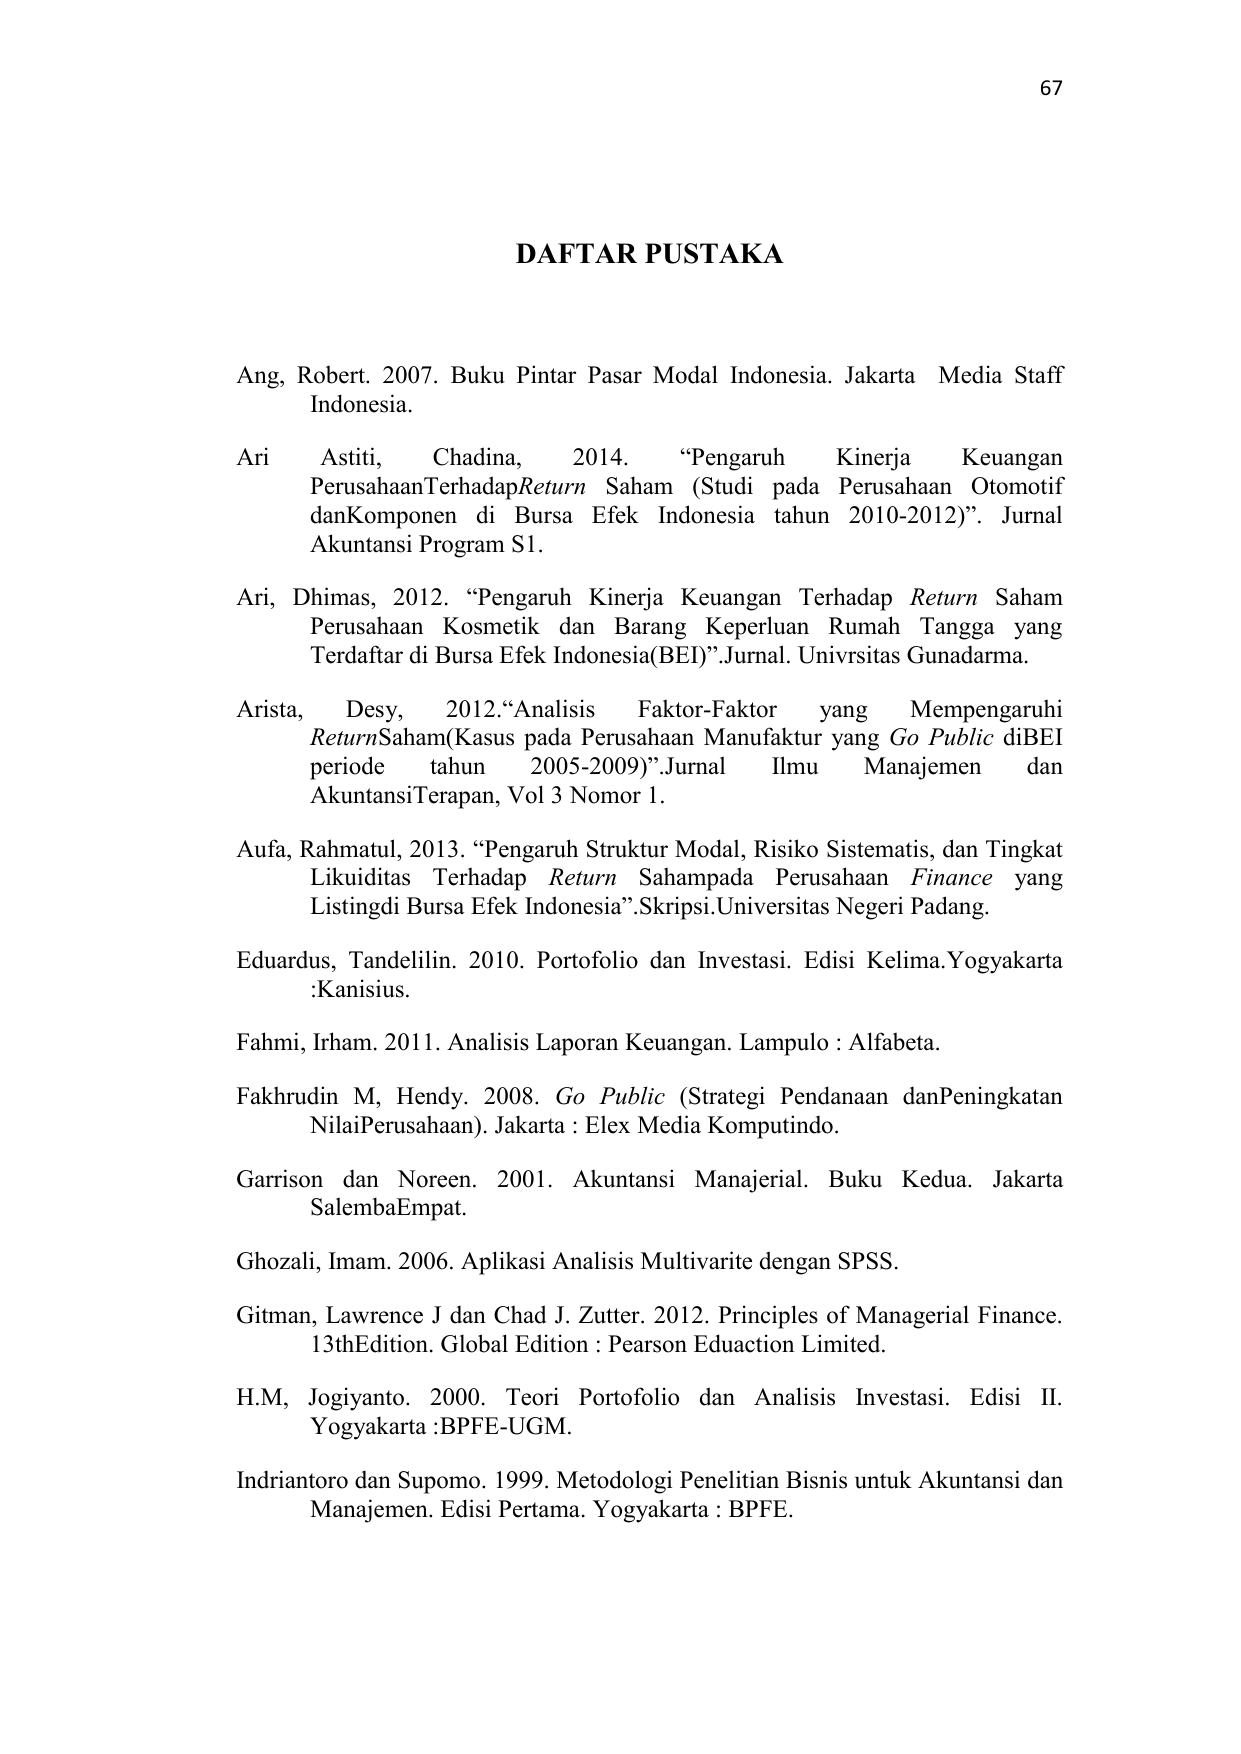 daftar pustaka UMY Repository